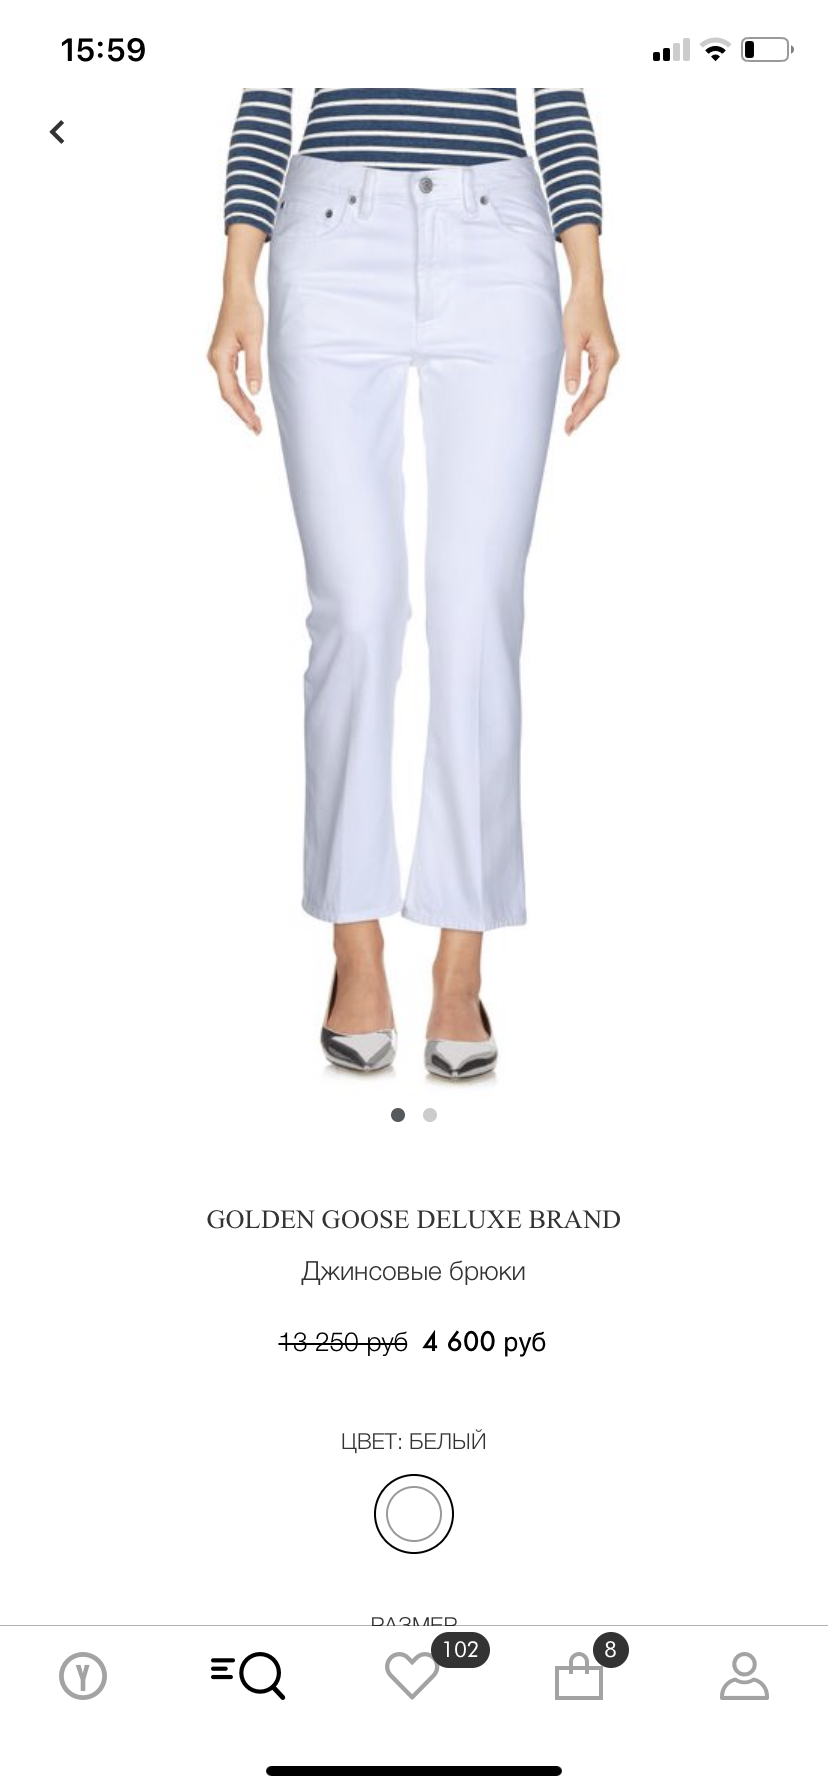 Белые джинсы Golden Goose Deluxe Brand 27 размер (маломерят)